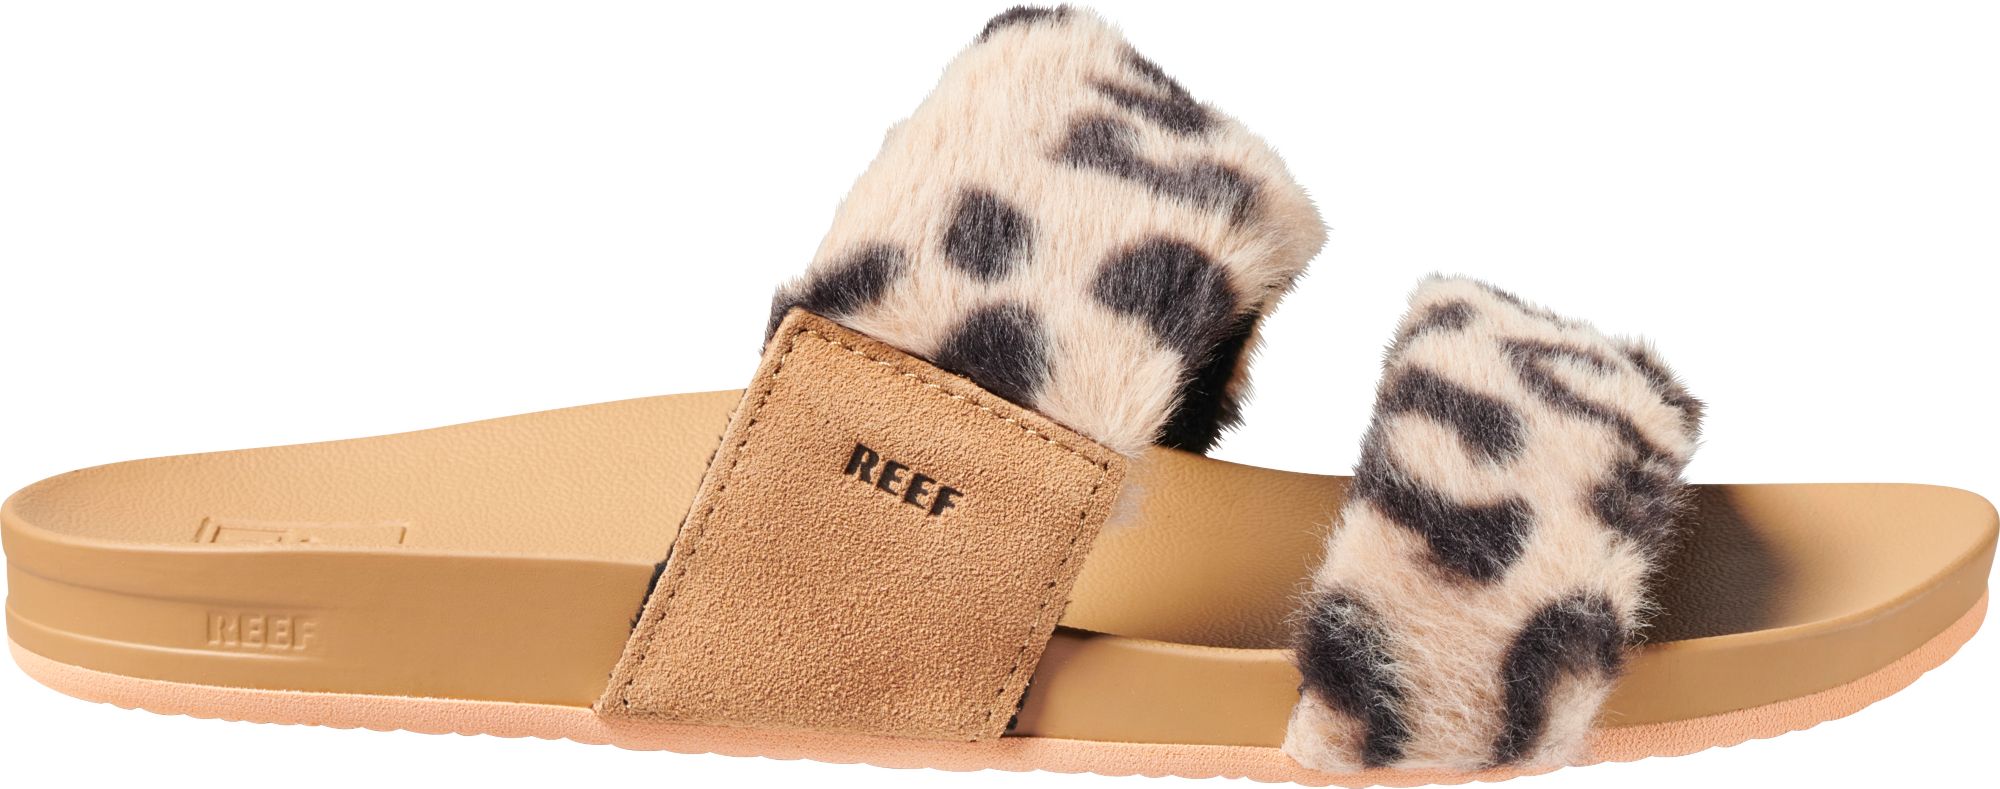 reef sandals retailers